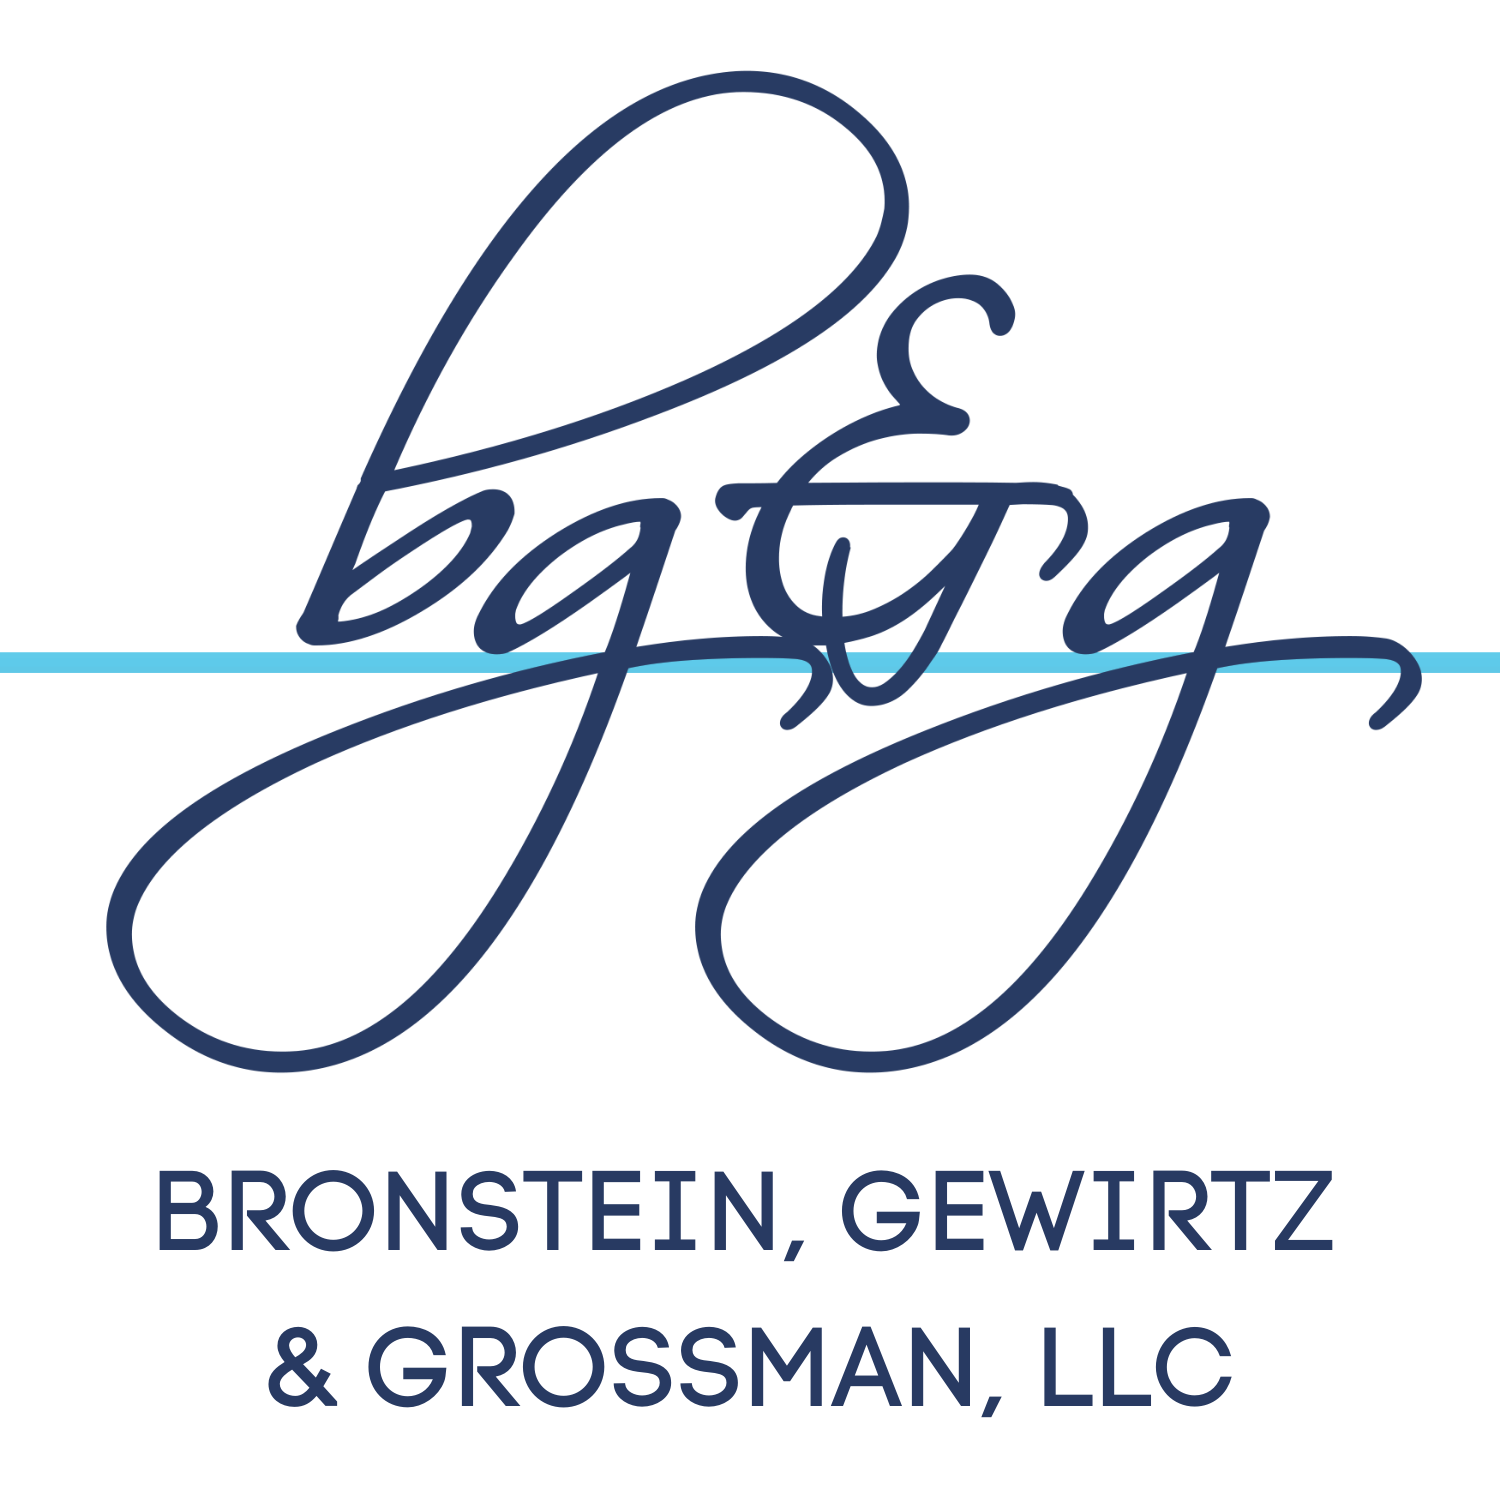 Bronstein, Gewirtz and Grossman, LLC, Thursday, October 28, 2021, Press release picture